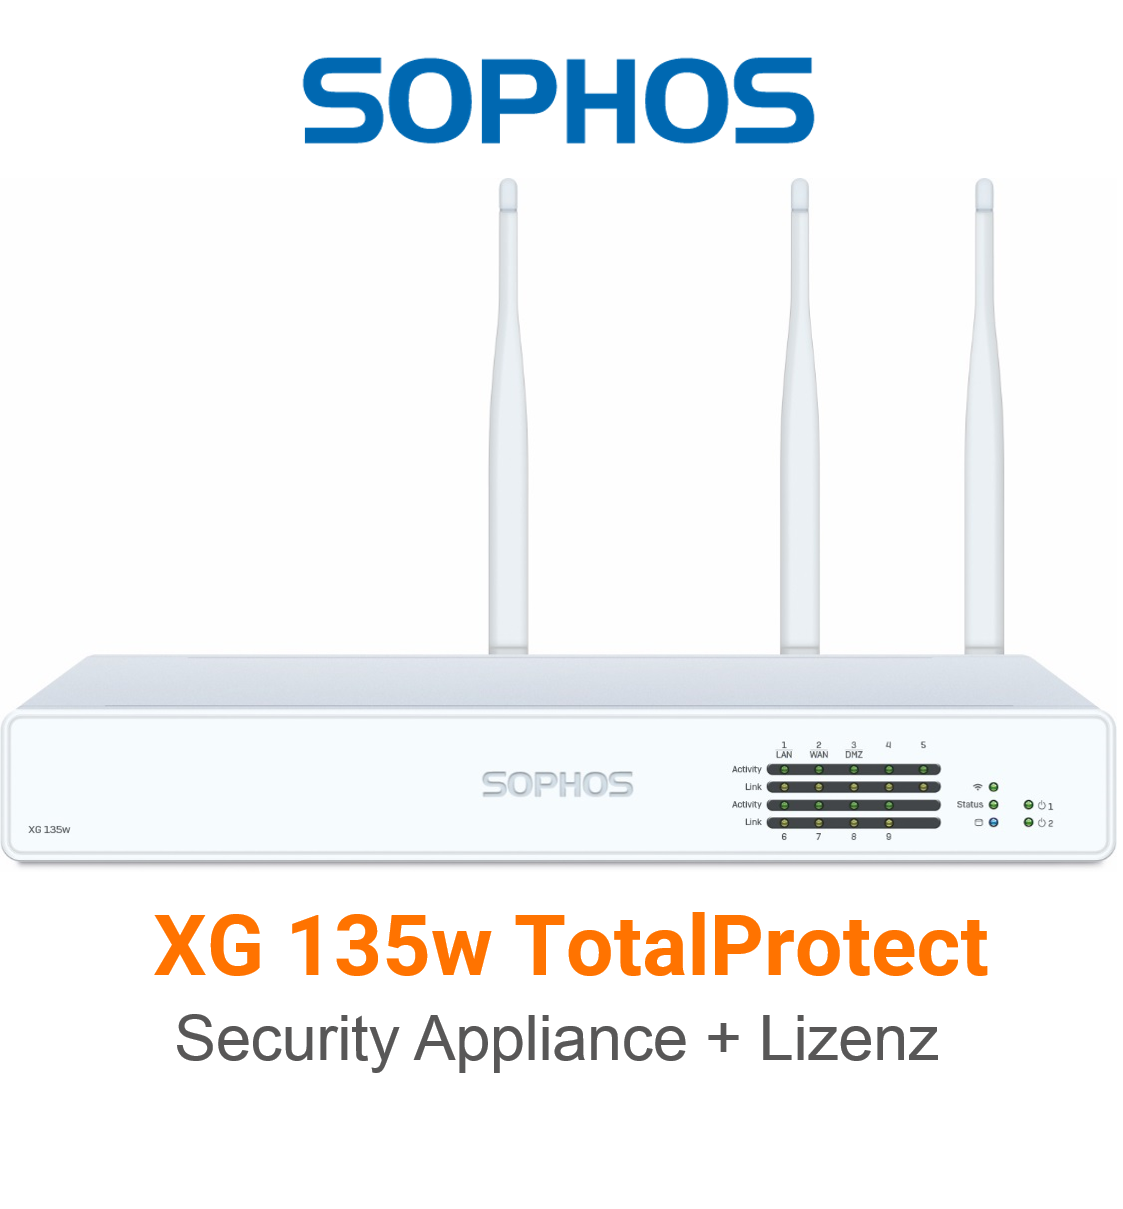 Sophos XG 135w TotalProtect Bundle (Hardware + Lizenz)